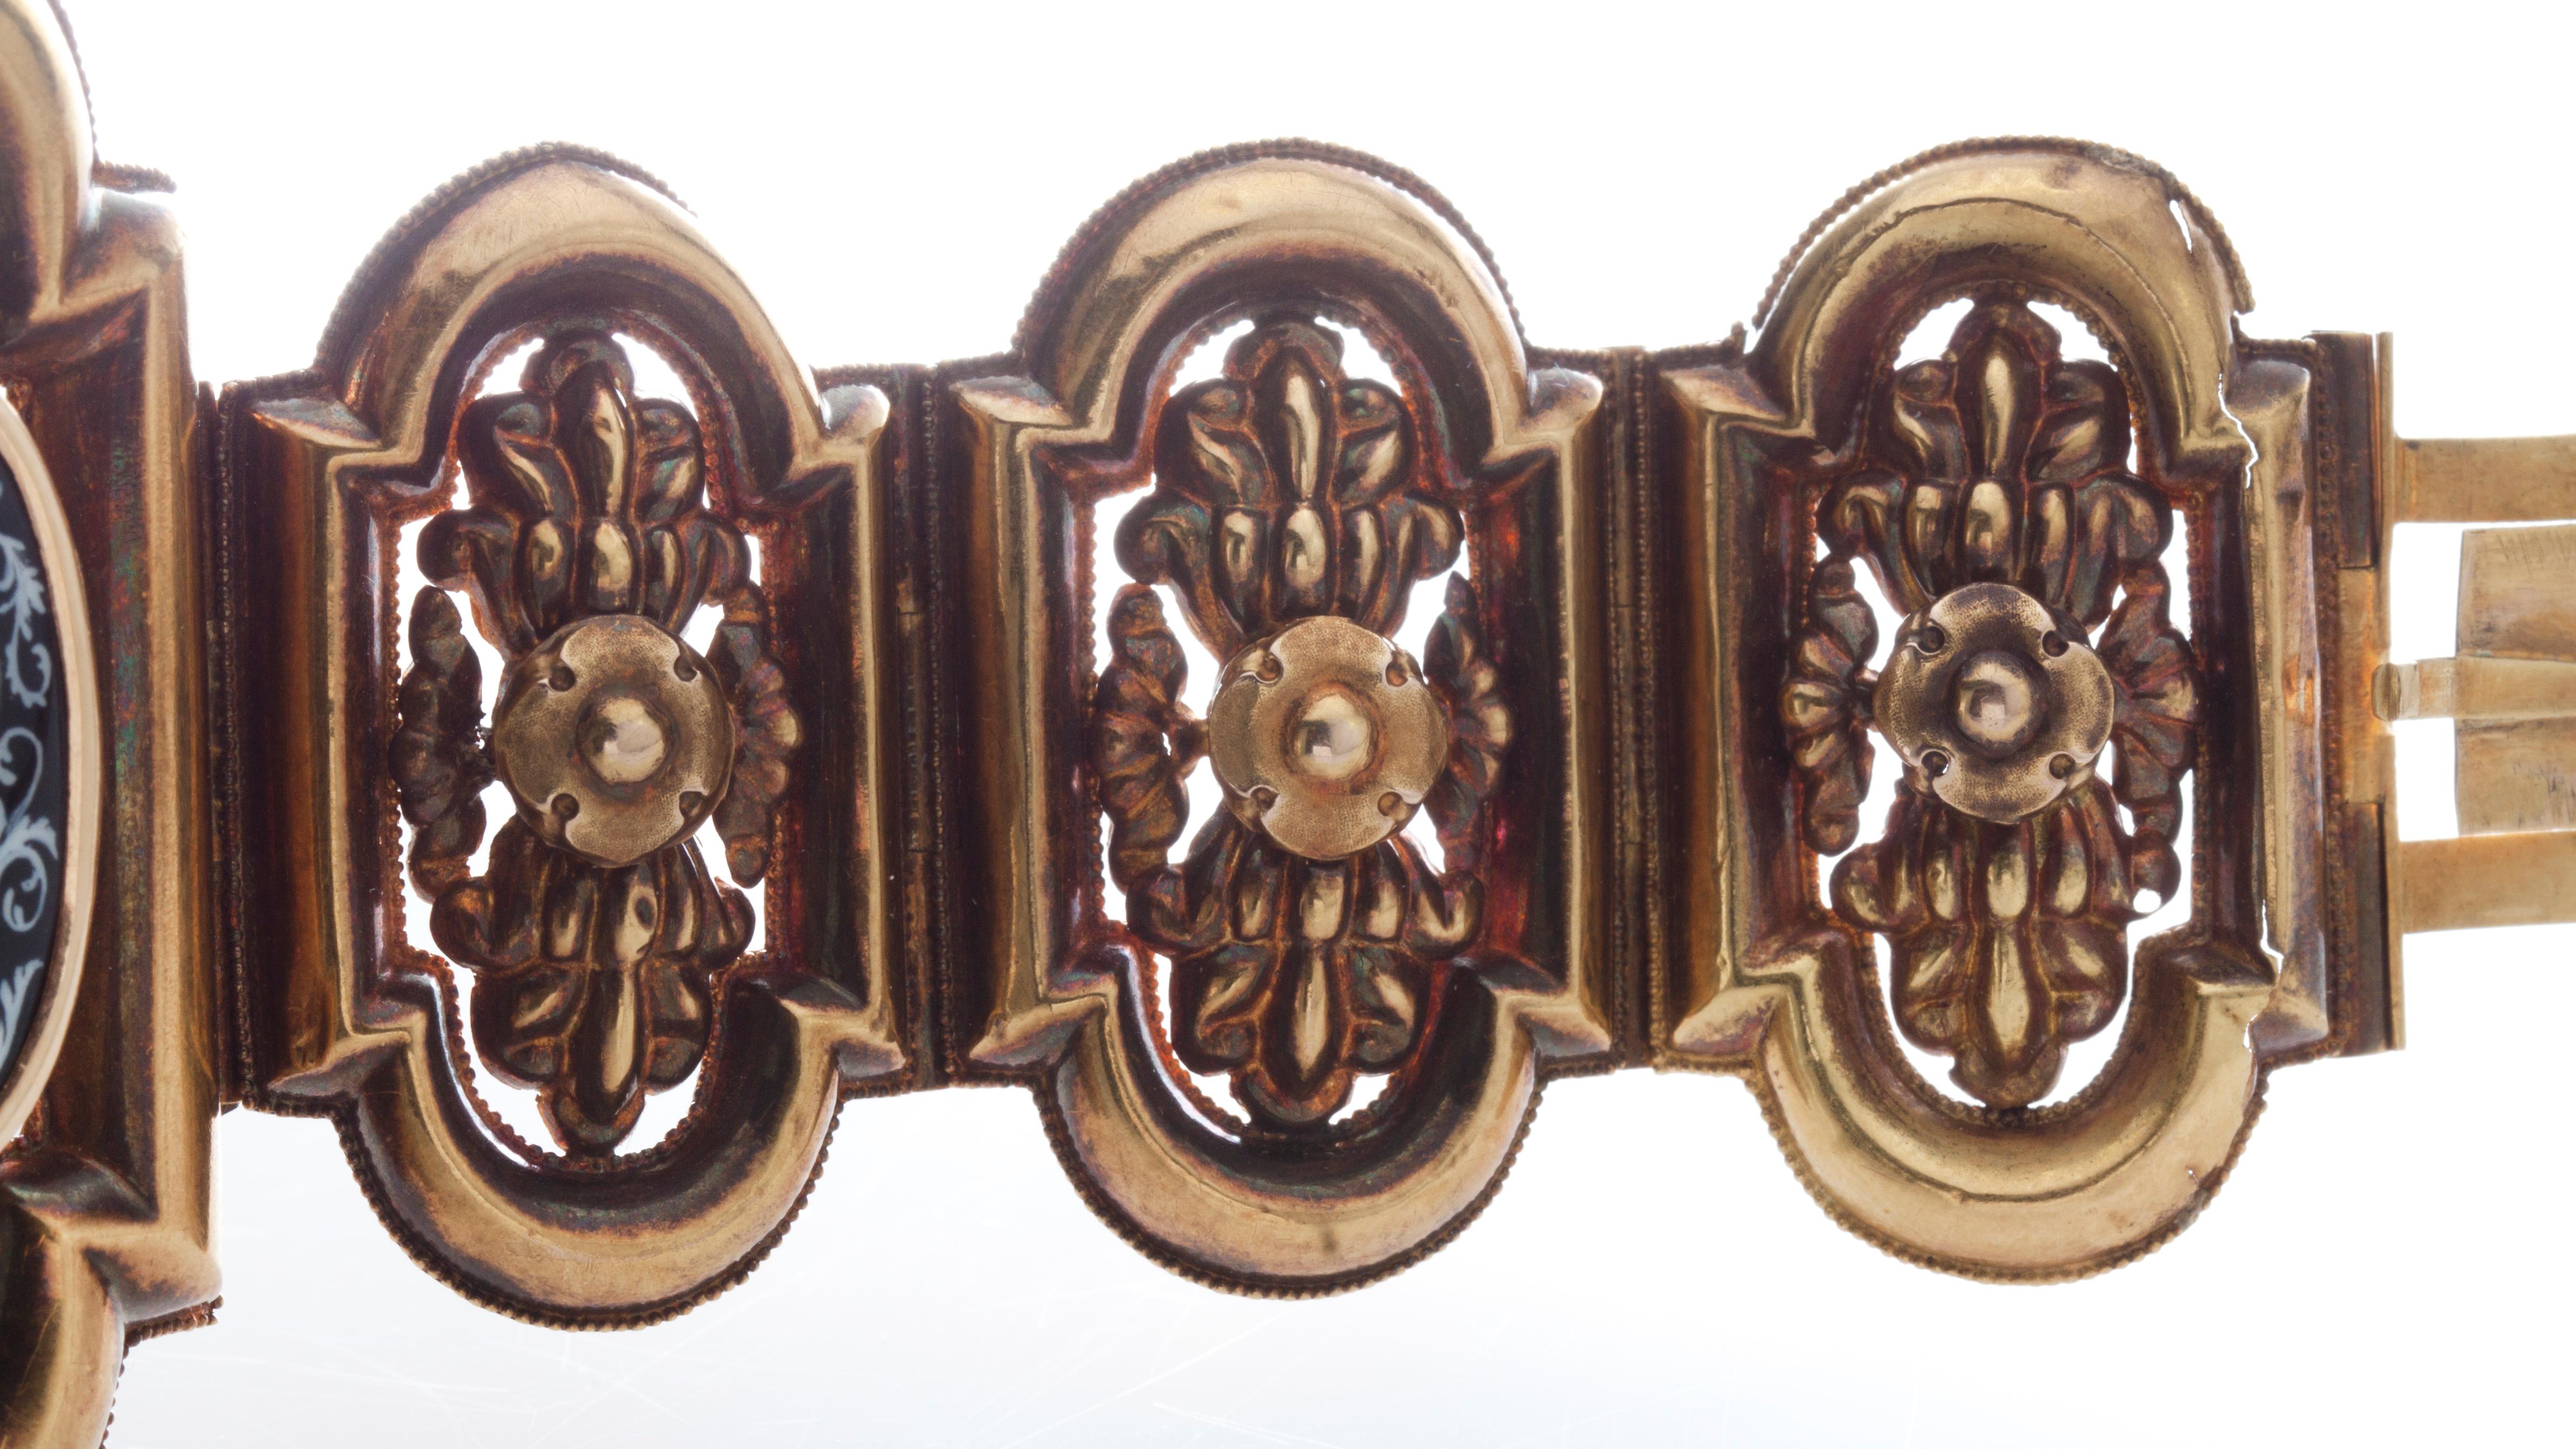 Antique 19th Century 18 Karat Gold Bracelet, Depicting Cornucopia In Good Condition For Sale In Braintree, GB